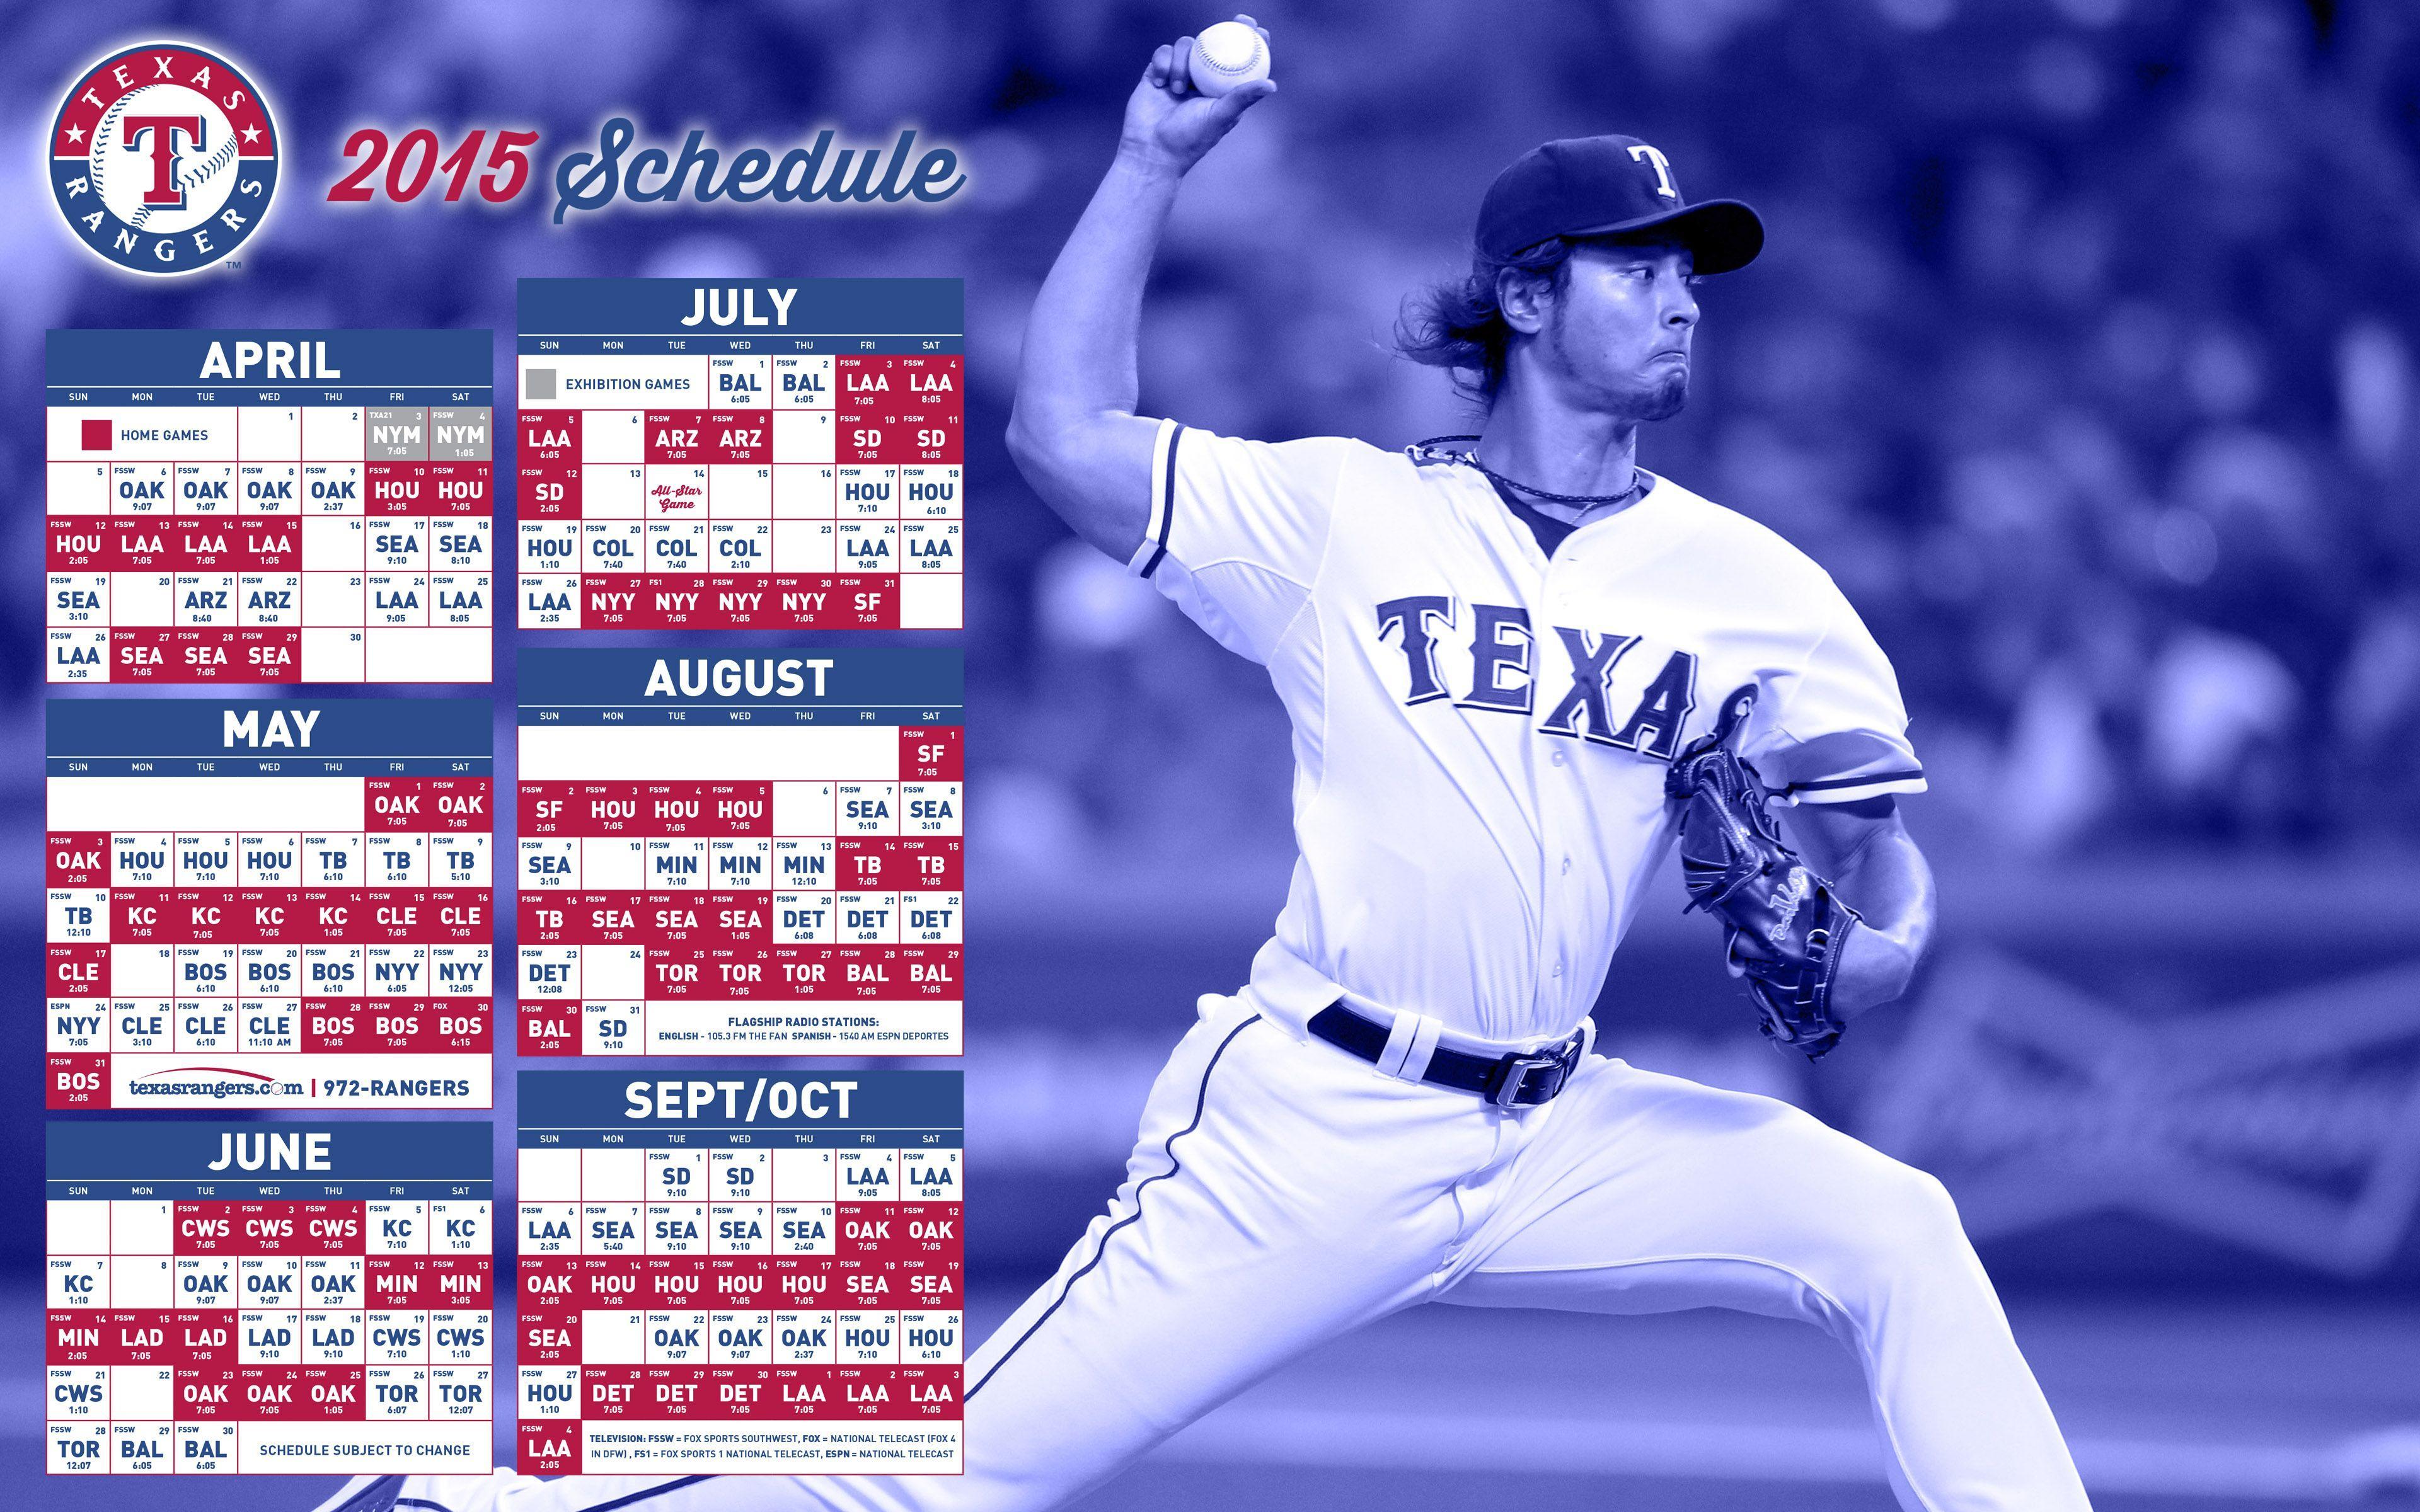 Texas Rangers Desktop Wallpaper